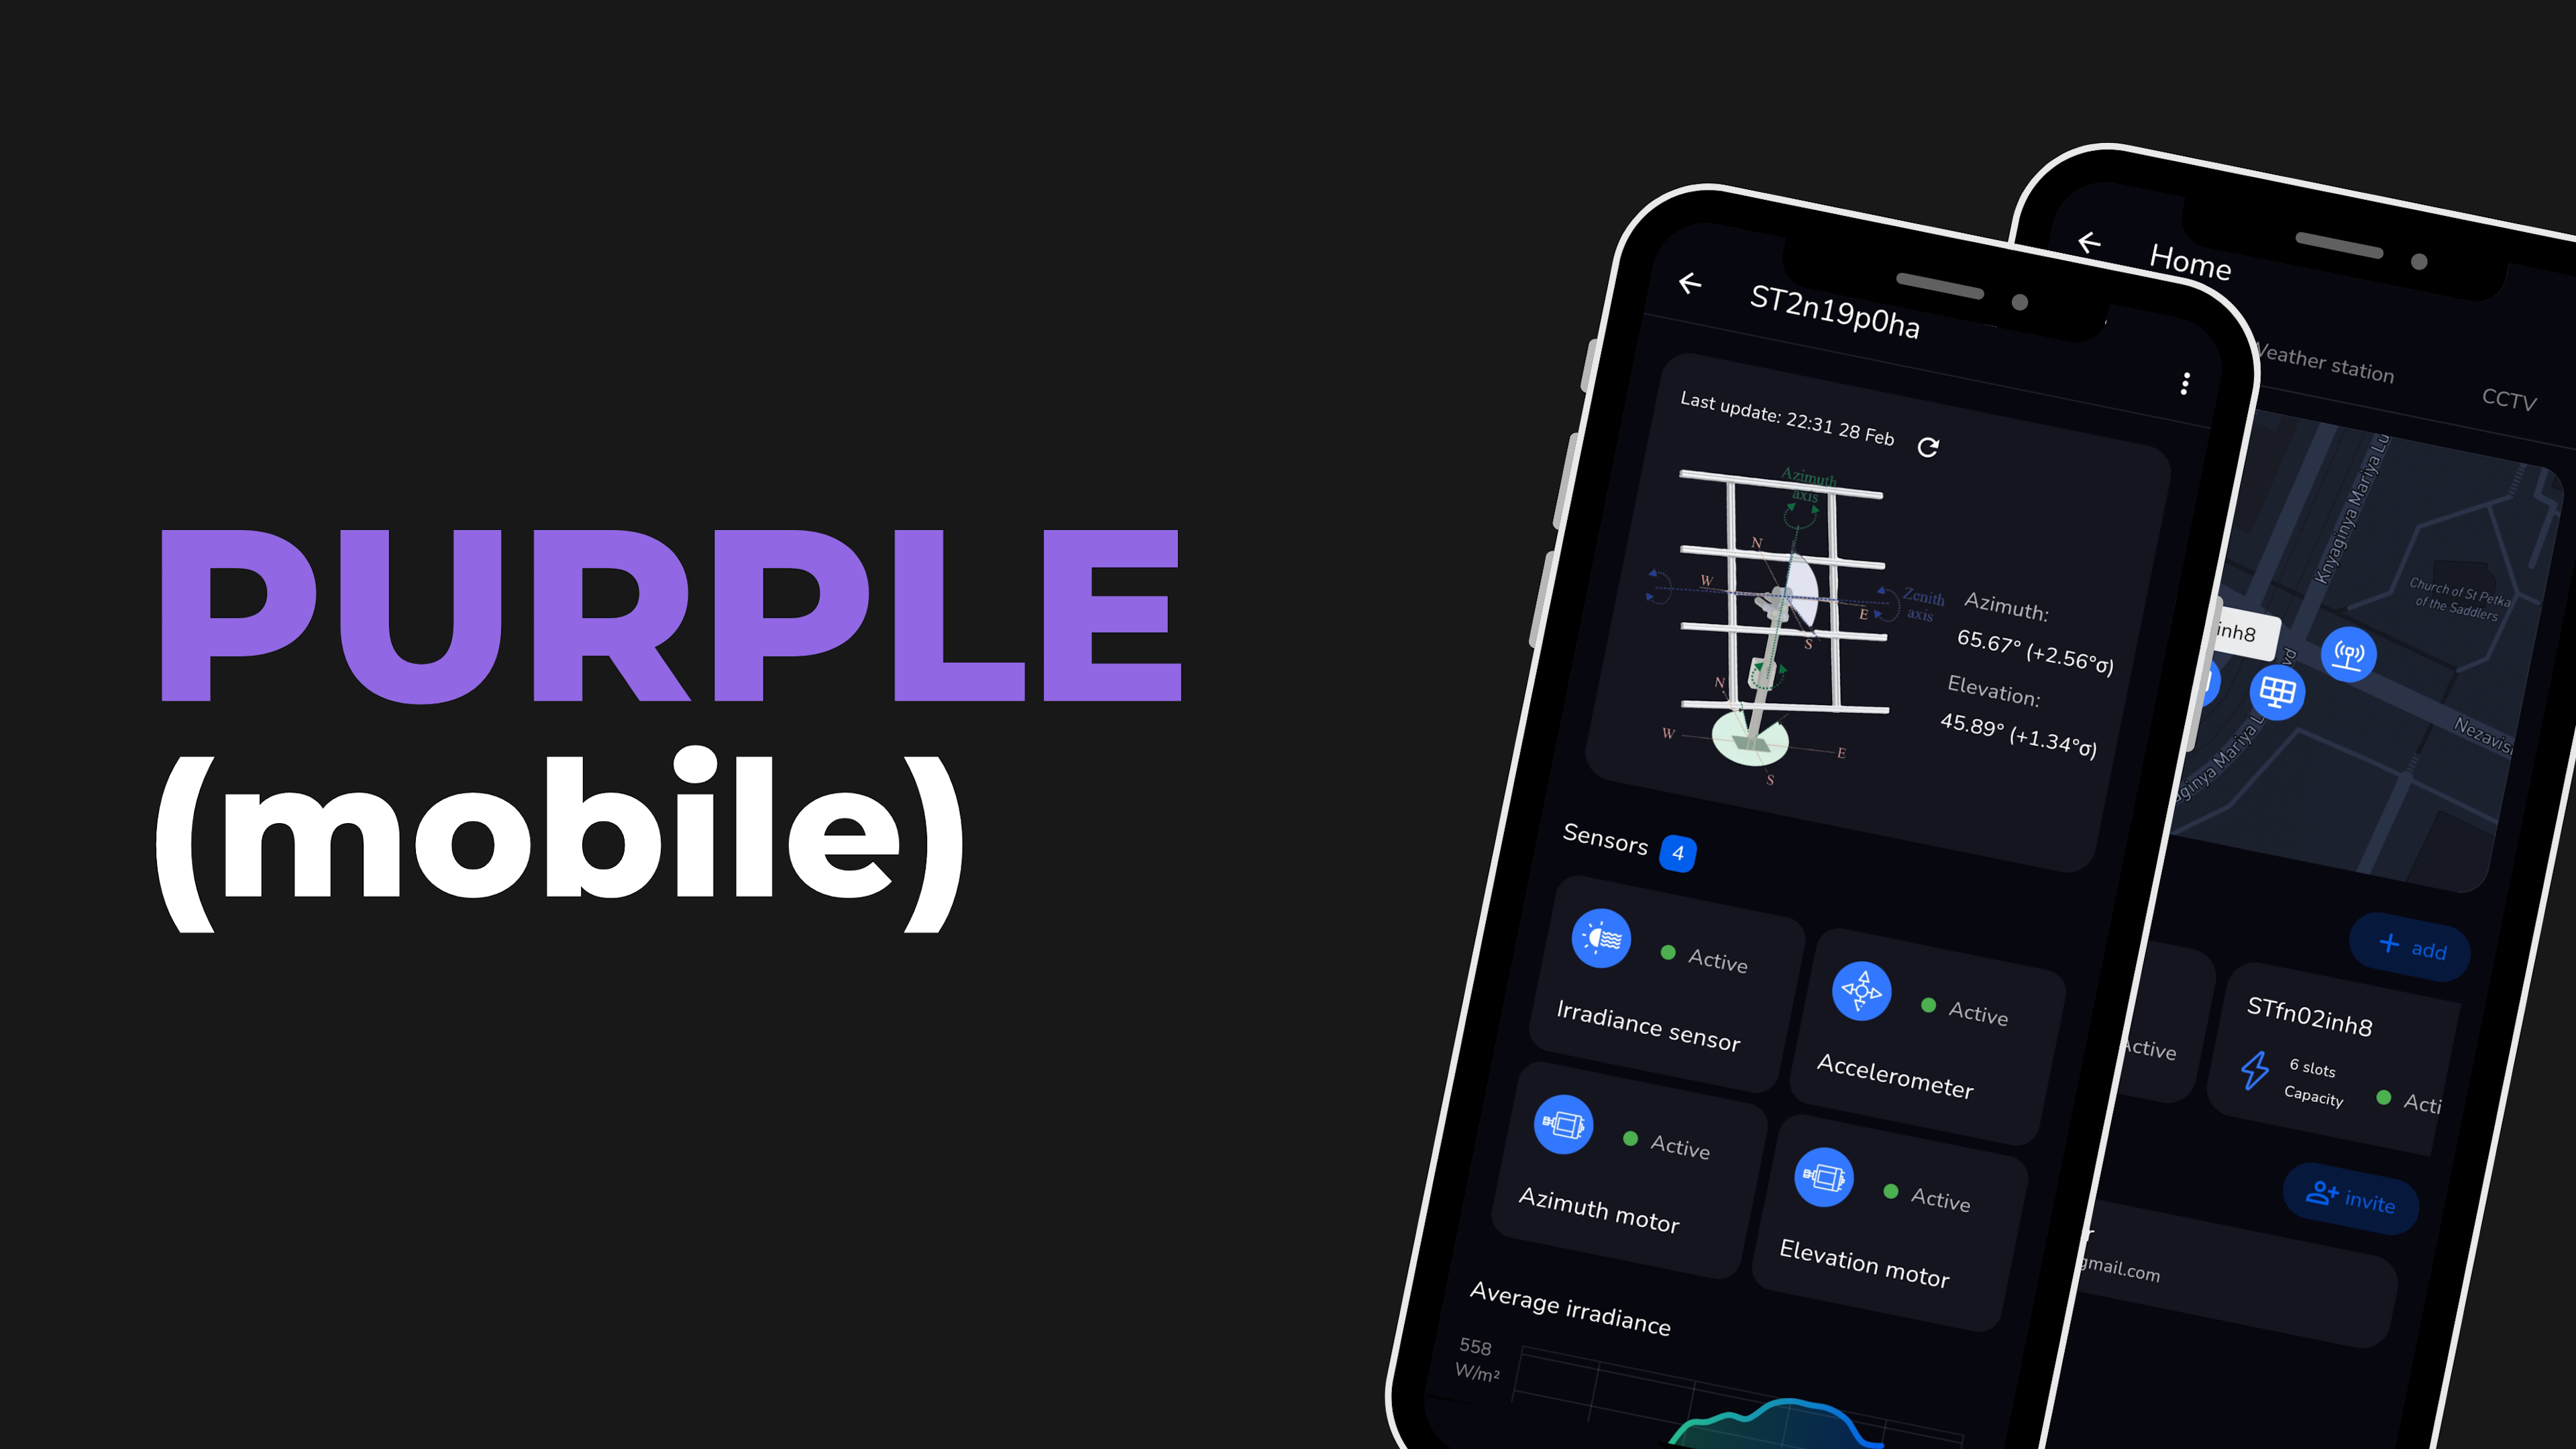 PURPLE (mobile)